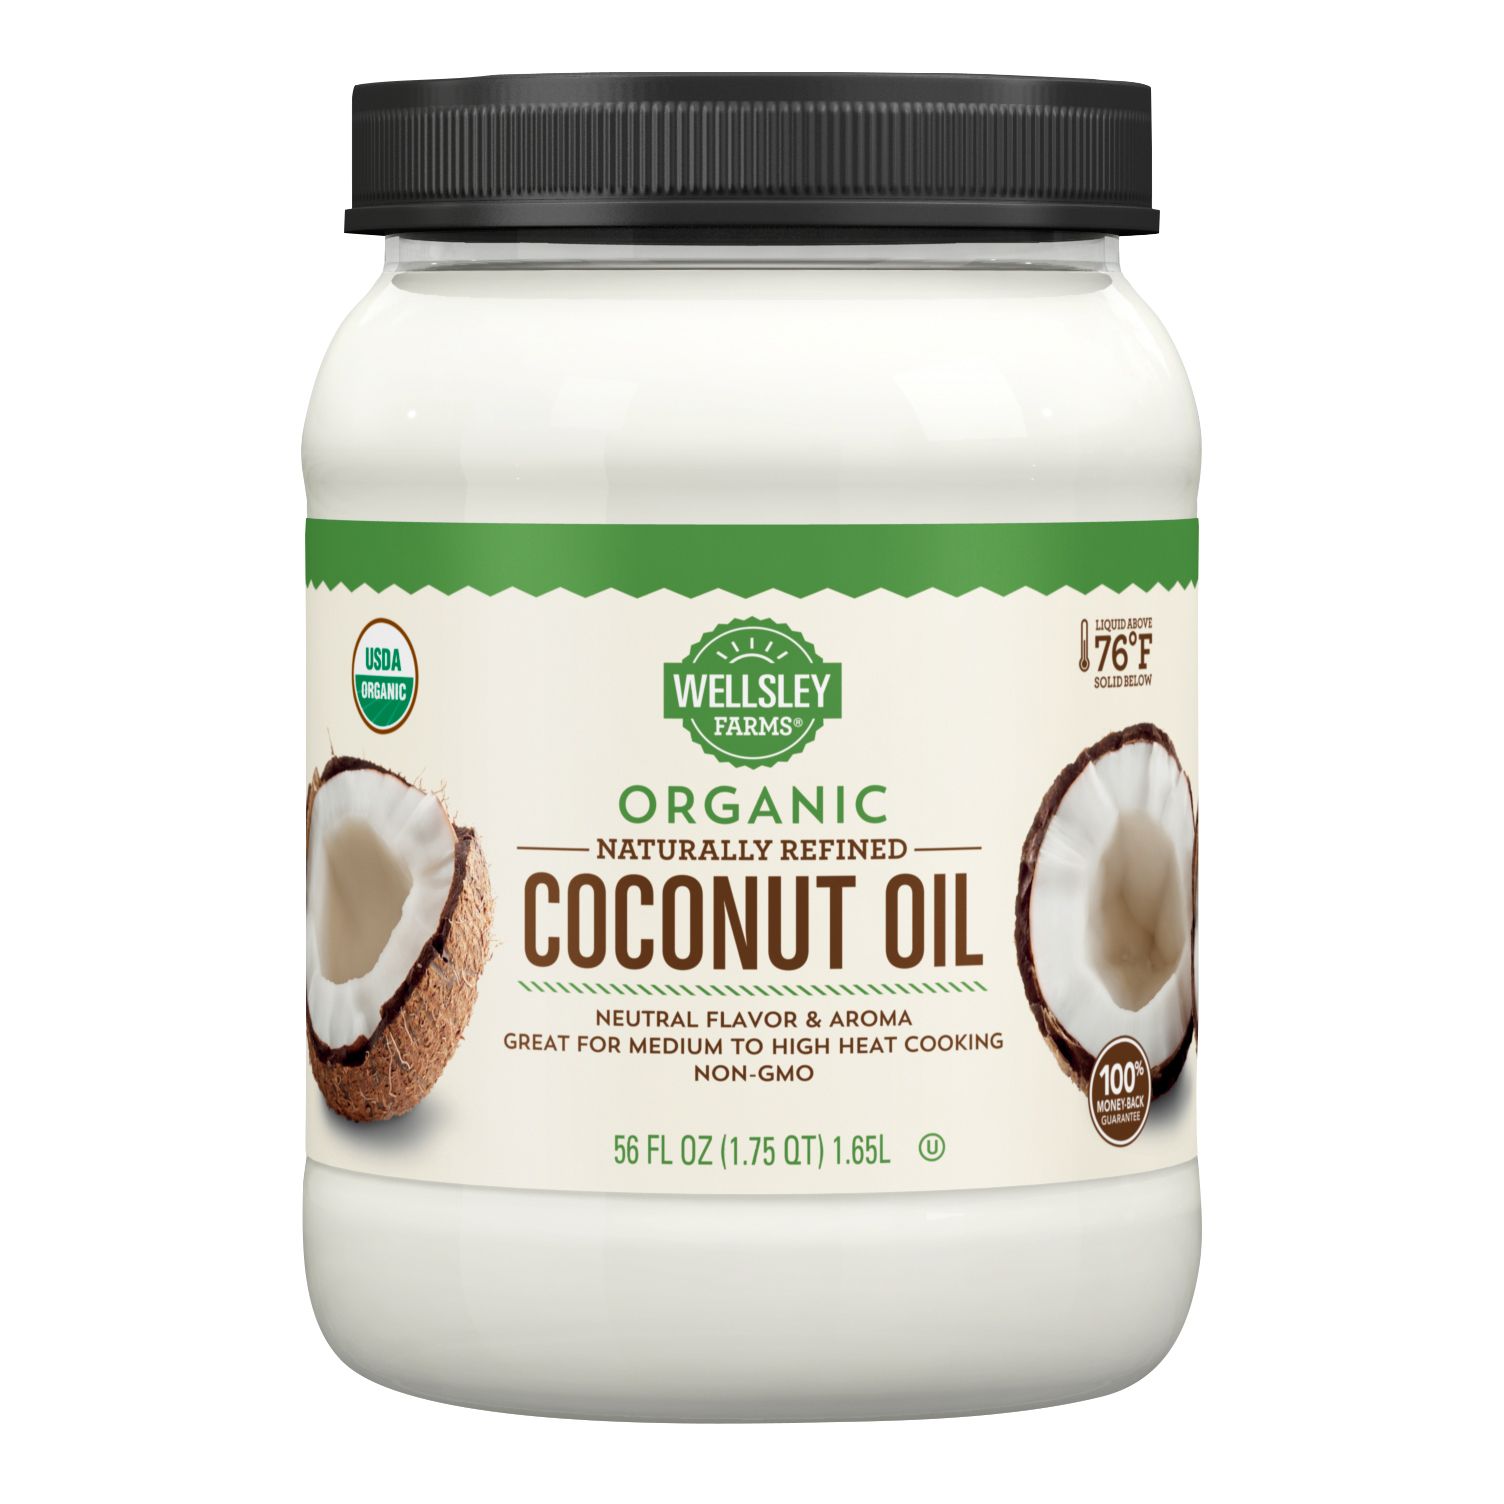 Via Natural 100% Pure Natural Oil 1 oz - Coconut